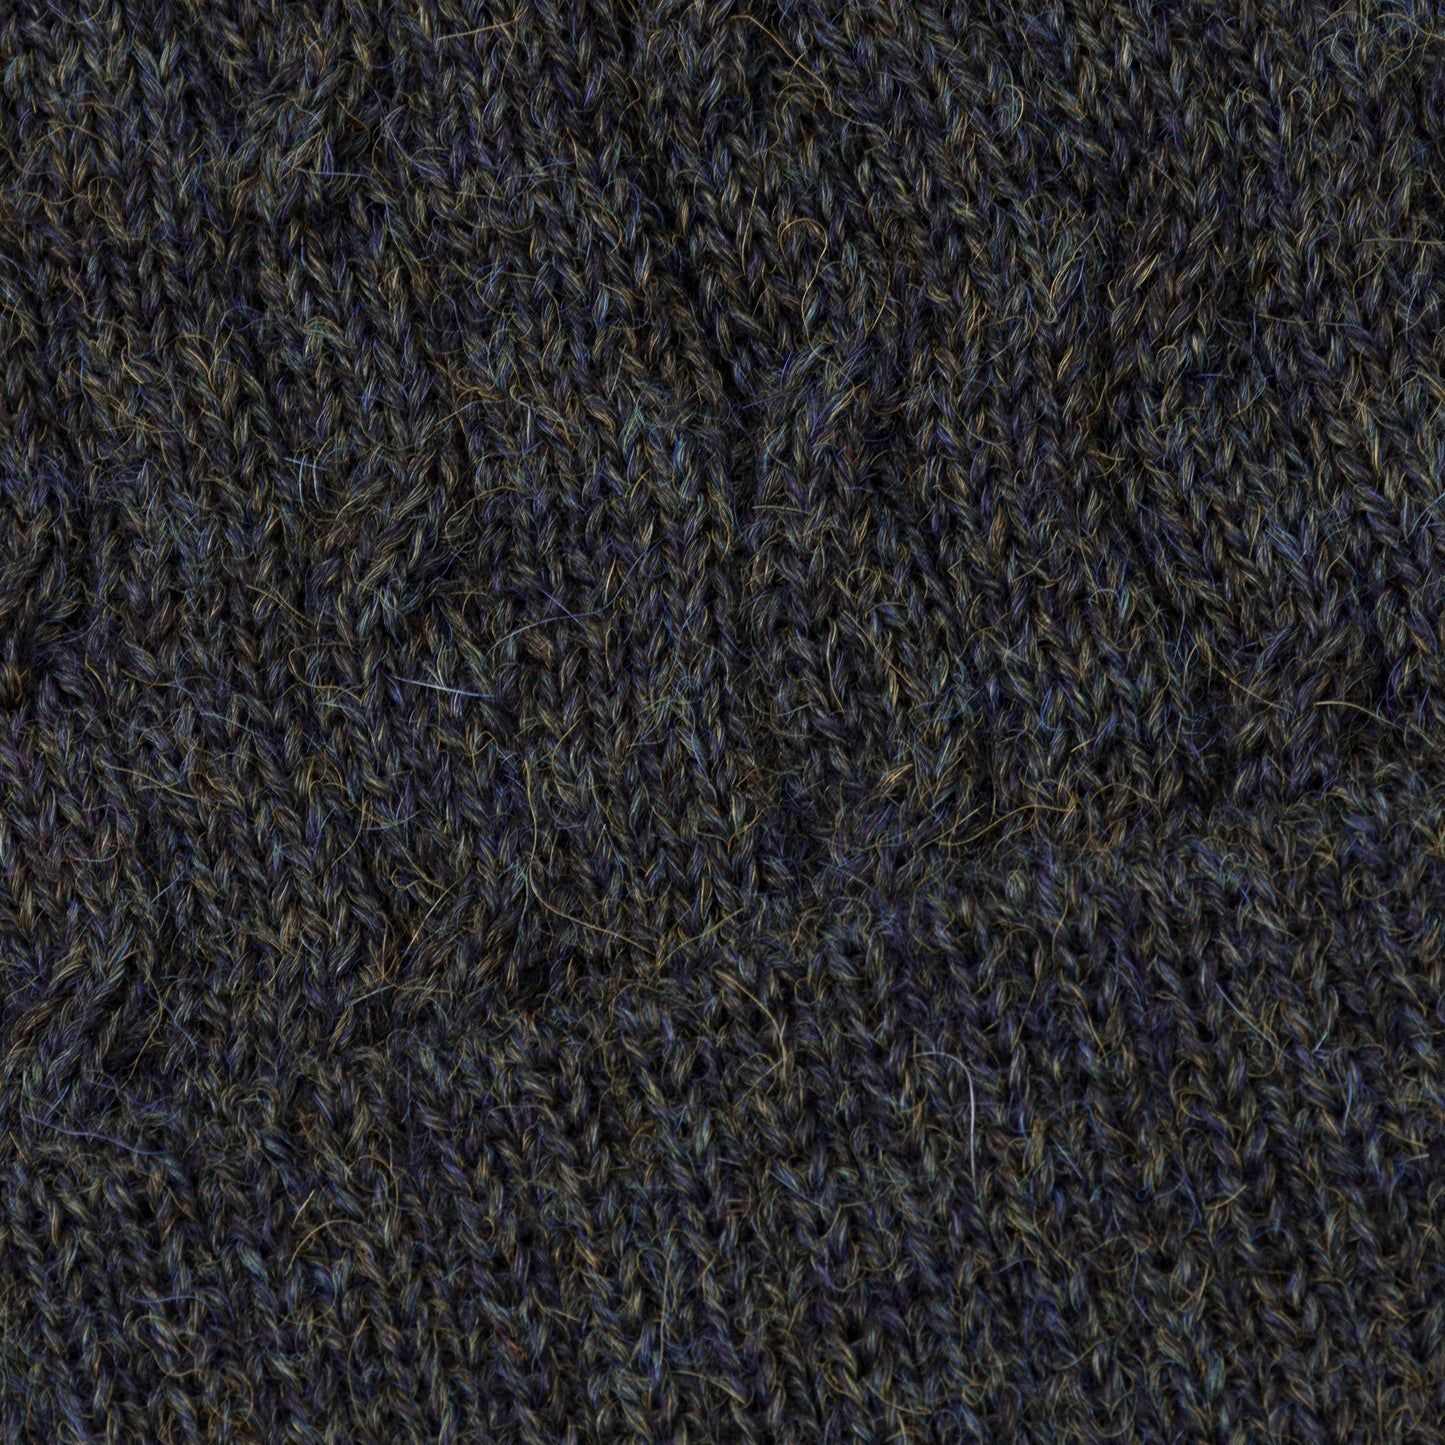 NOVICA  Cable-Knit 100% Alpaca Hat in Moss from Peru, 'Moss Braid Cascade'